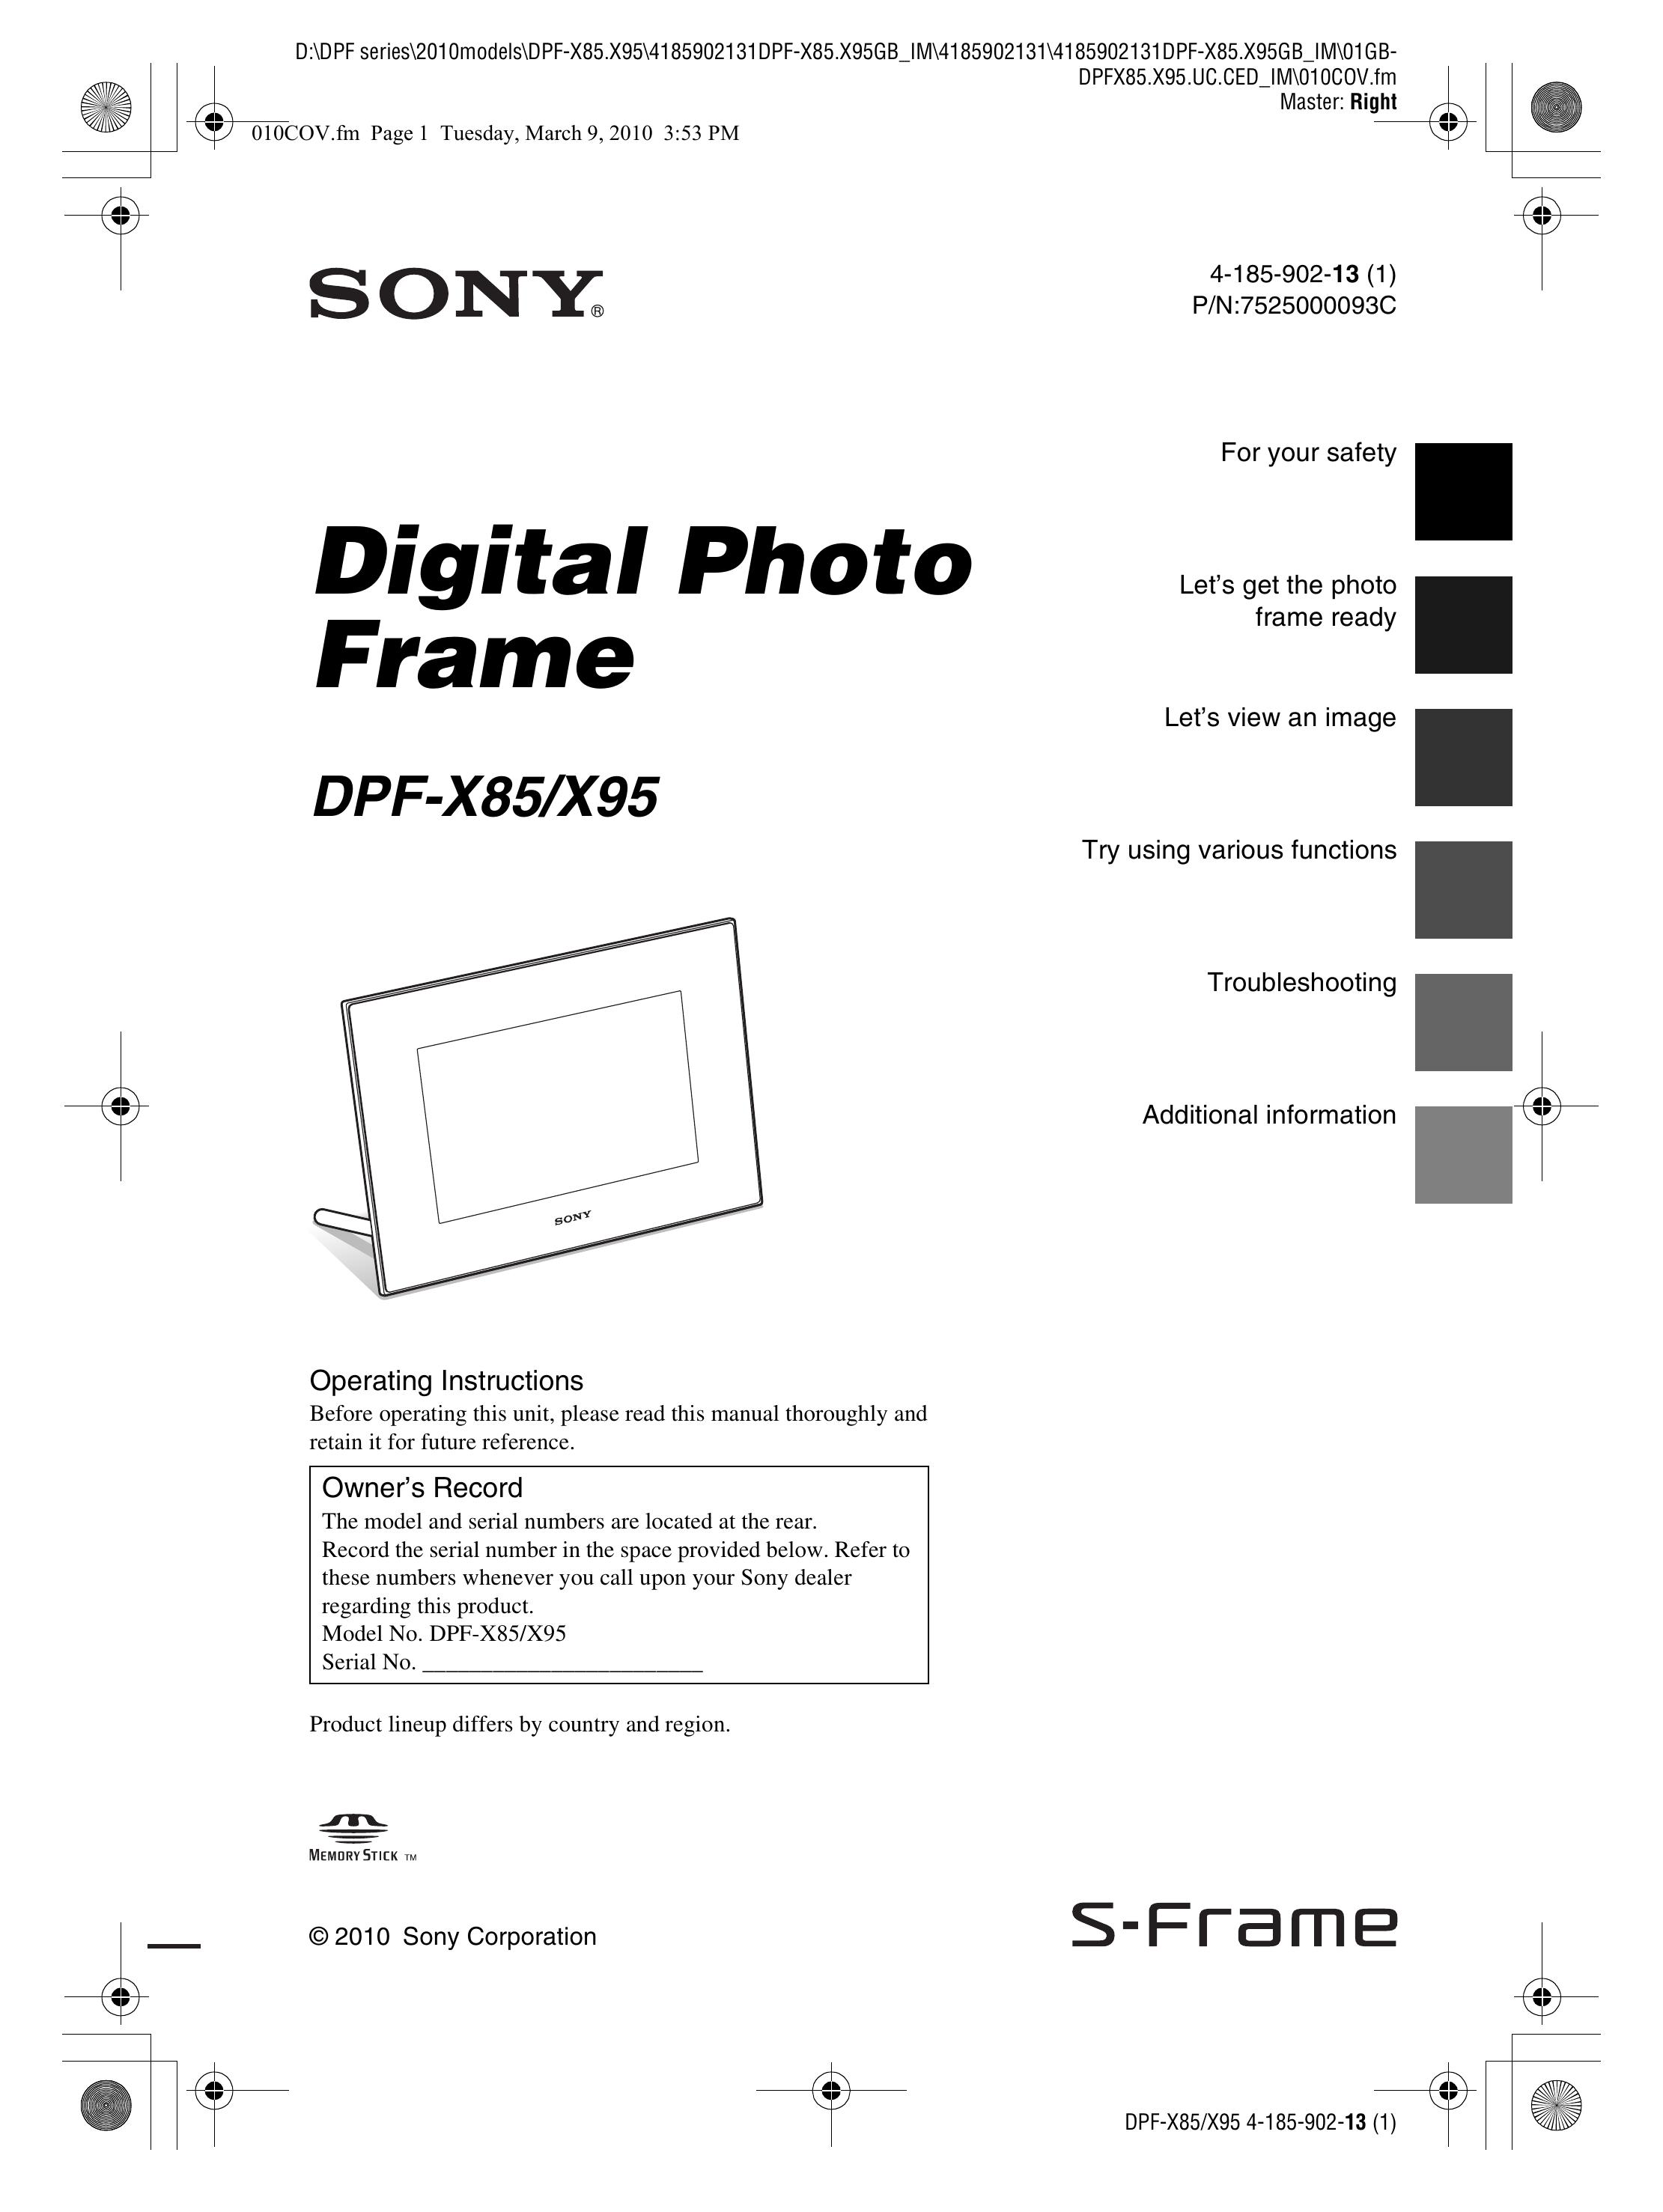 Sony 4-185-902-13 (1) Digital Photo Frame User Manual